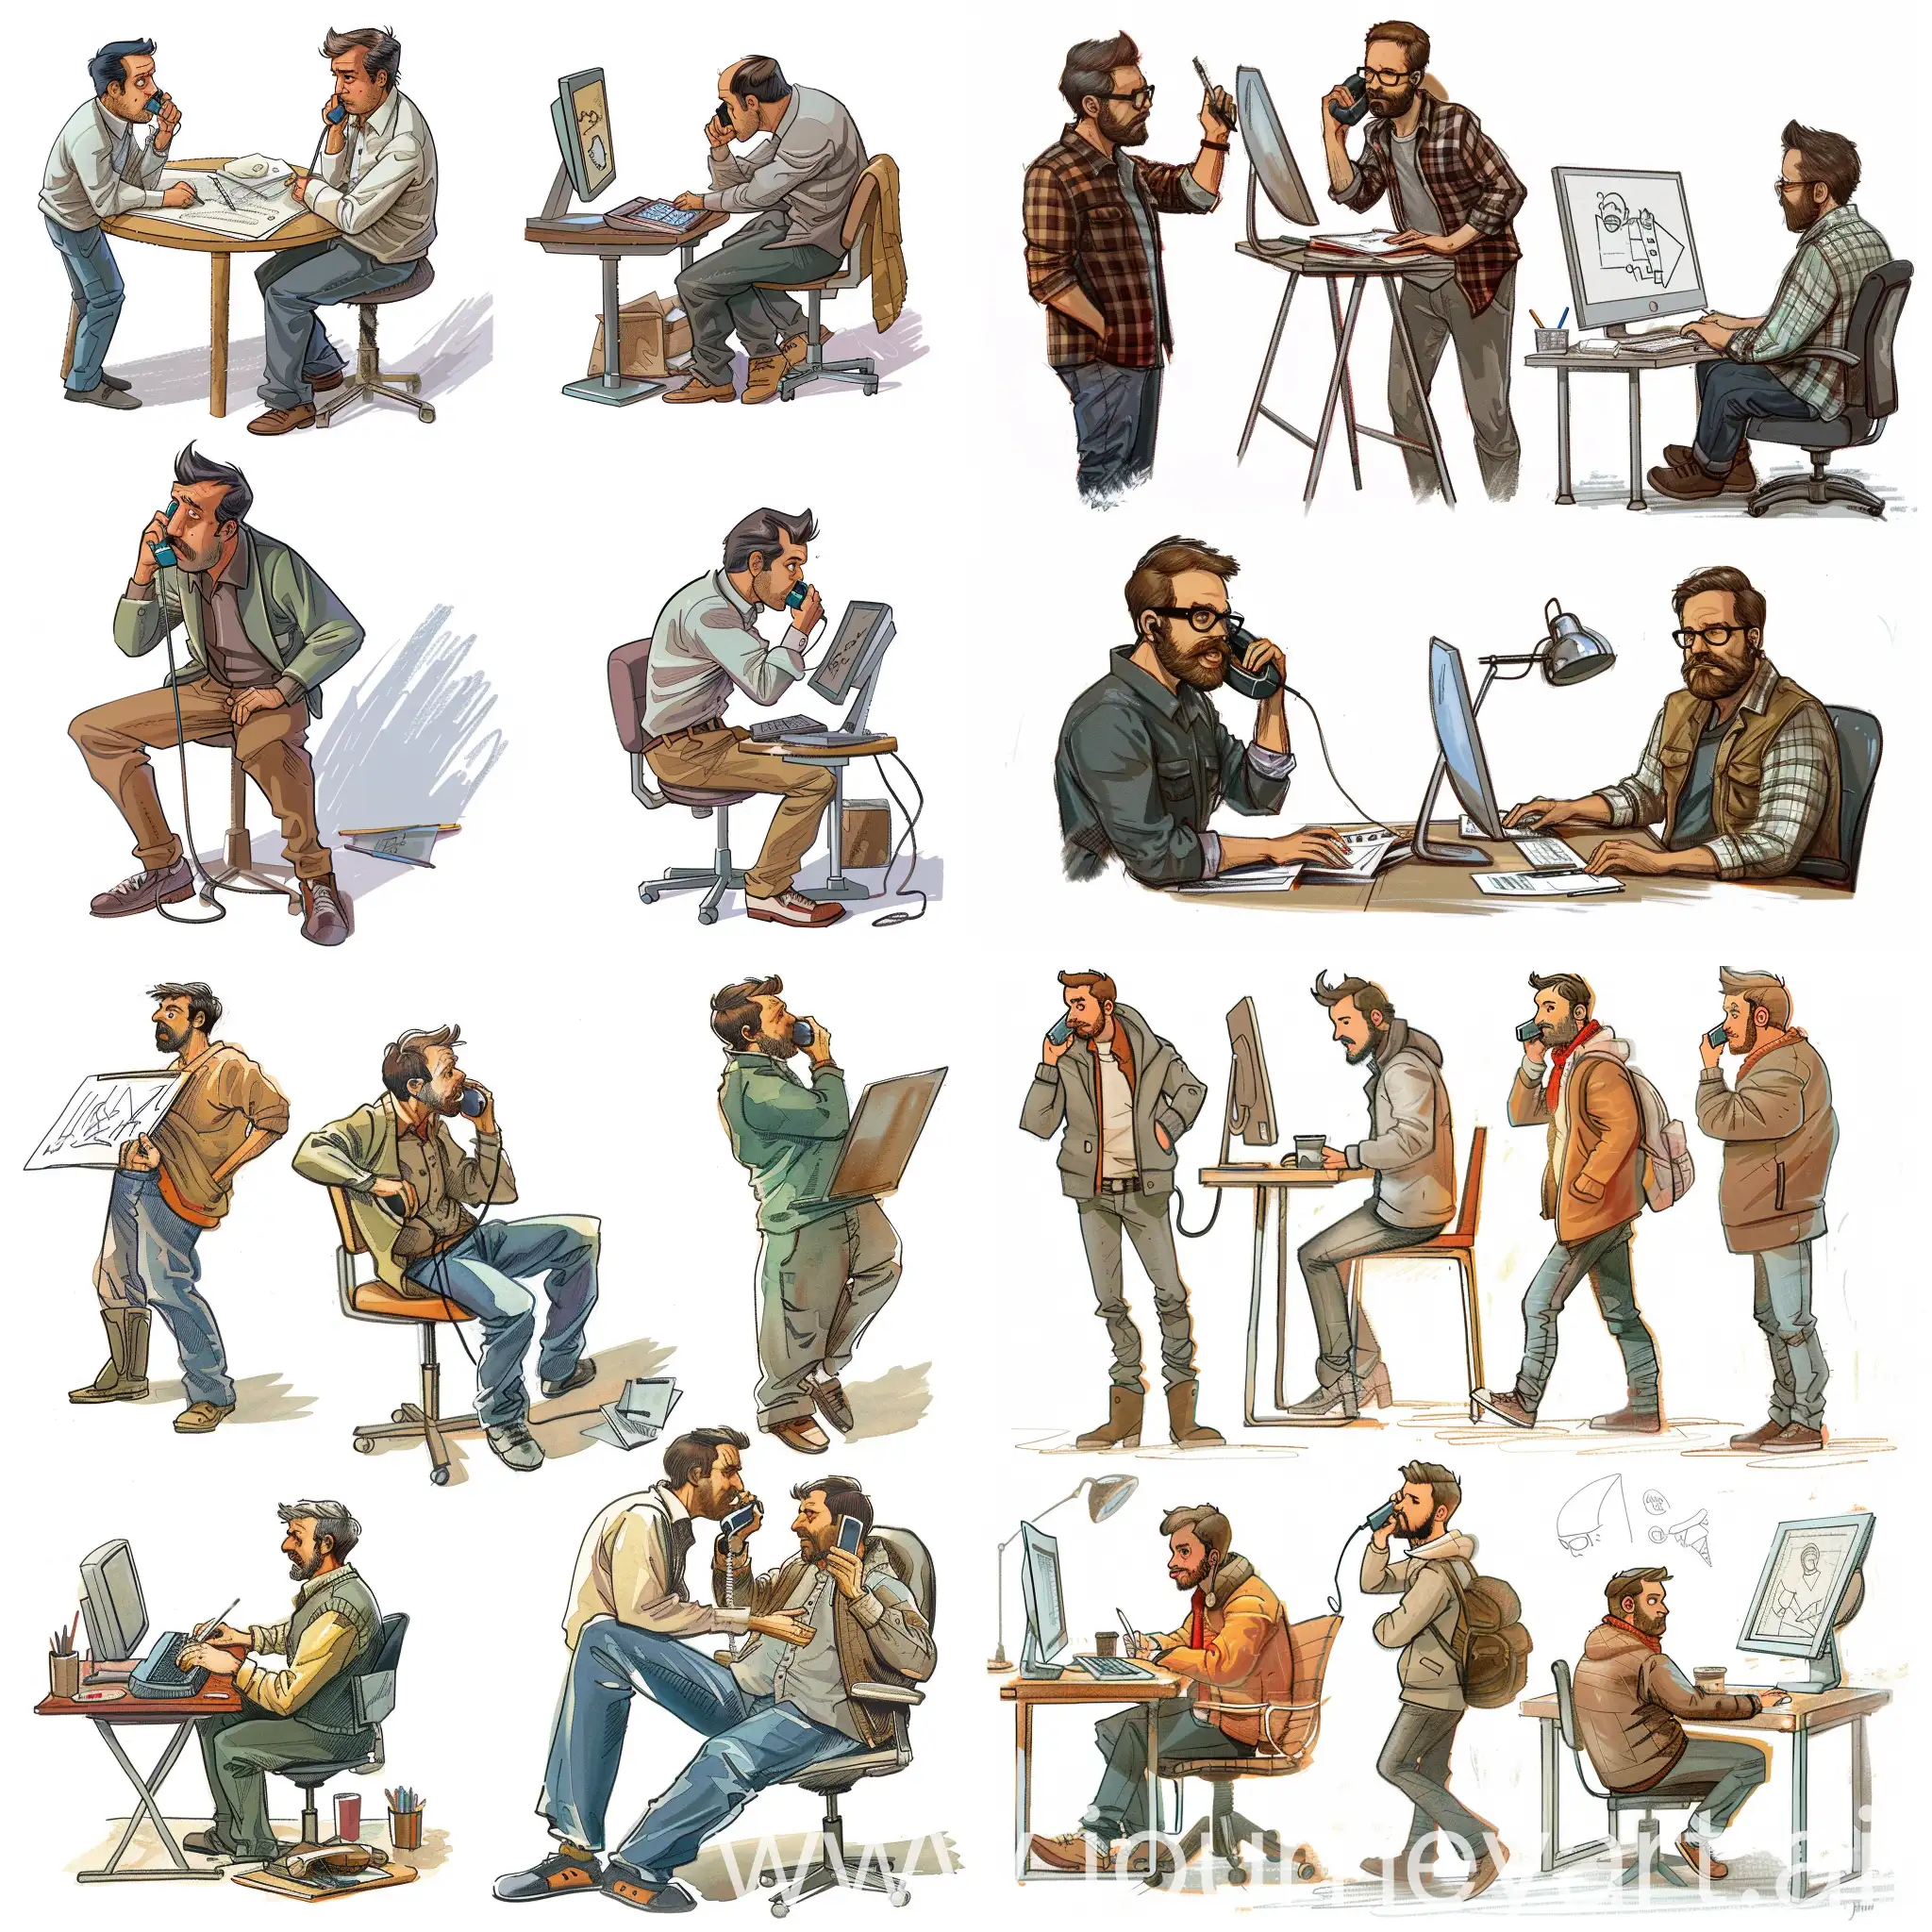 Humorous-Depiction-of-Five-Men-Multitasking